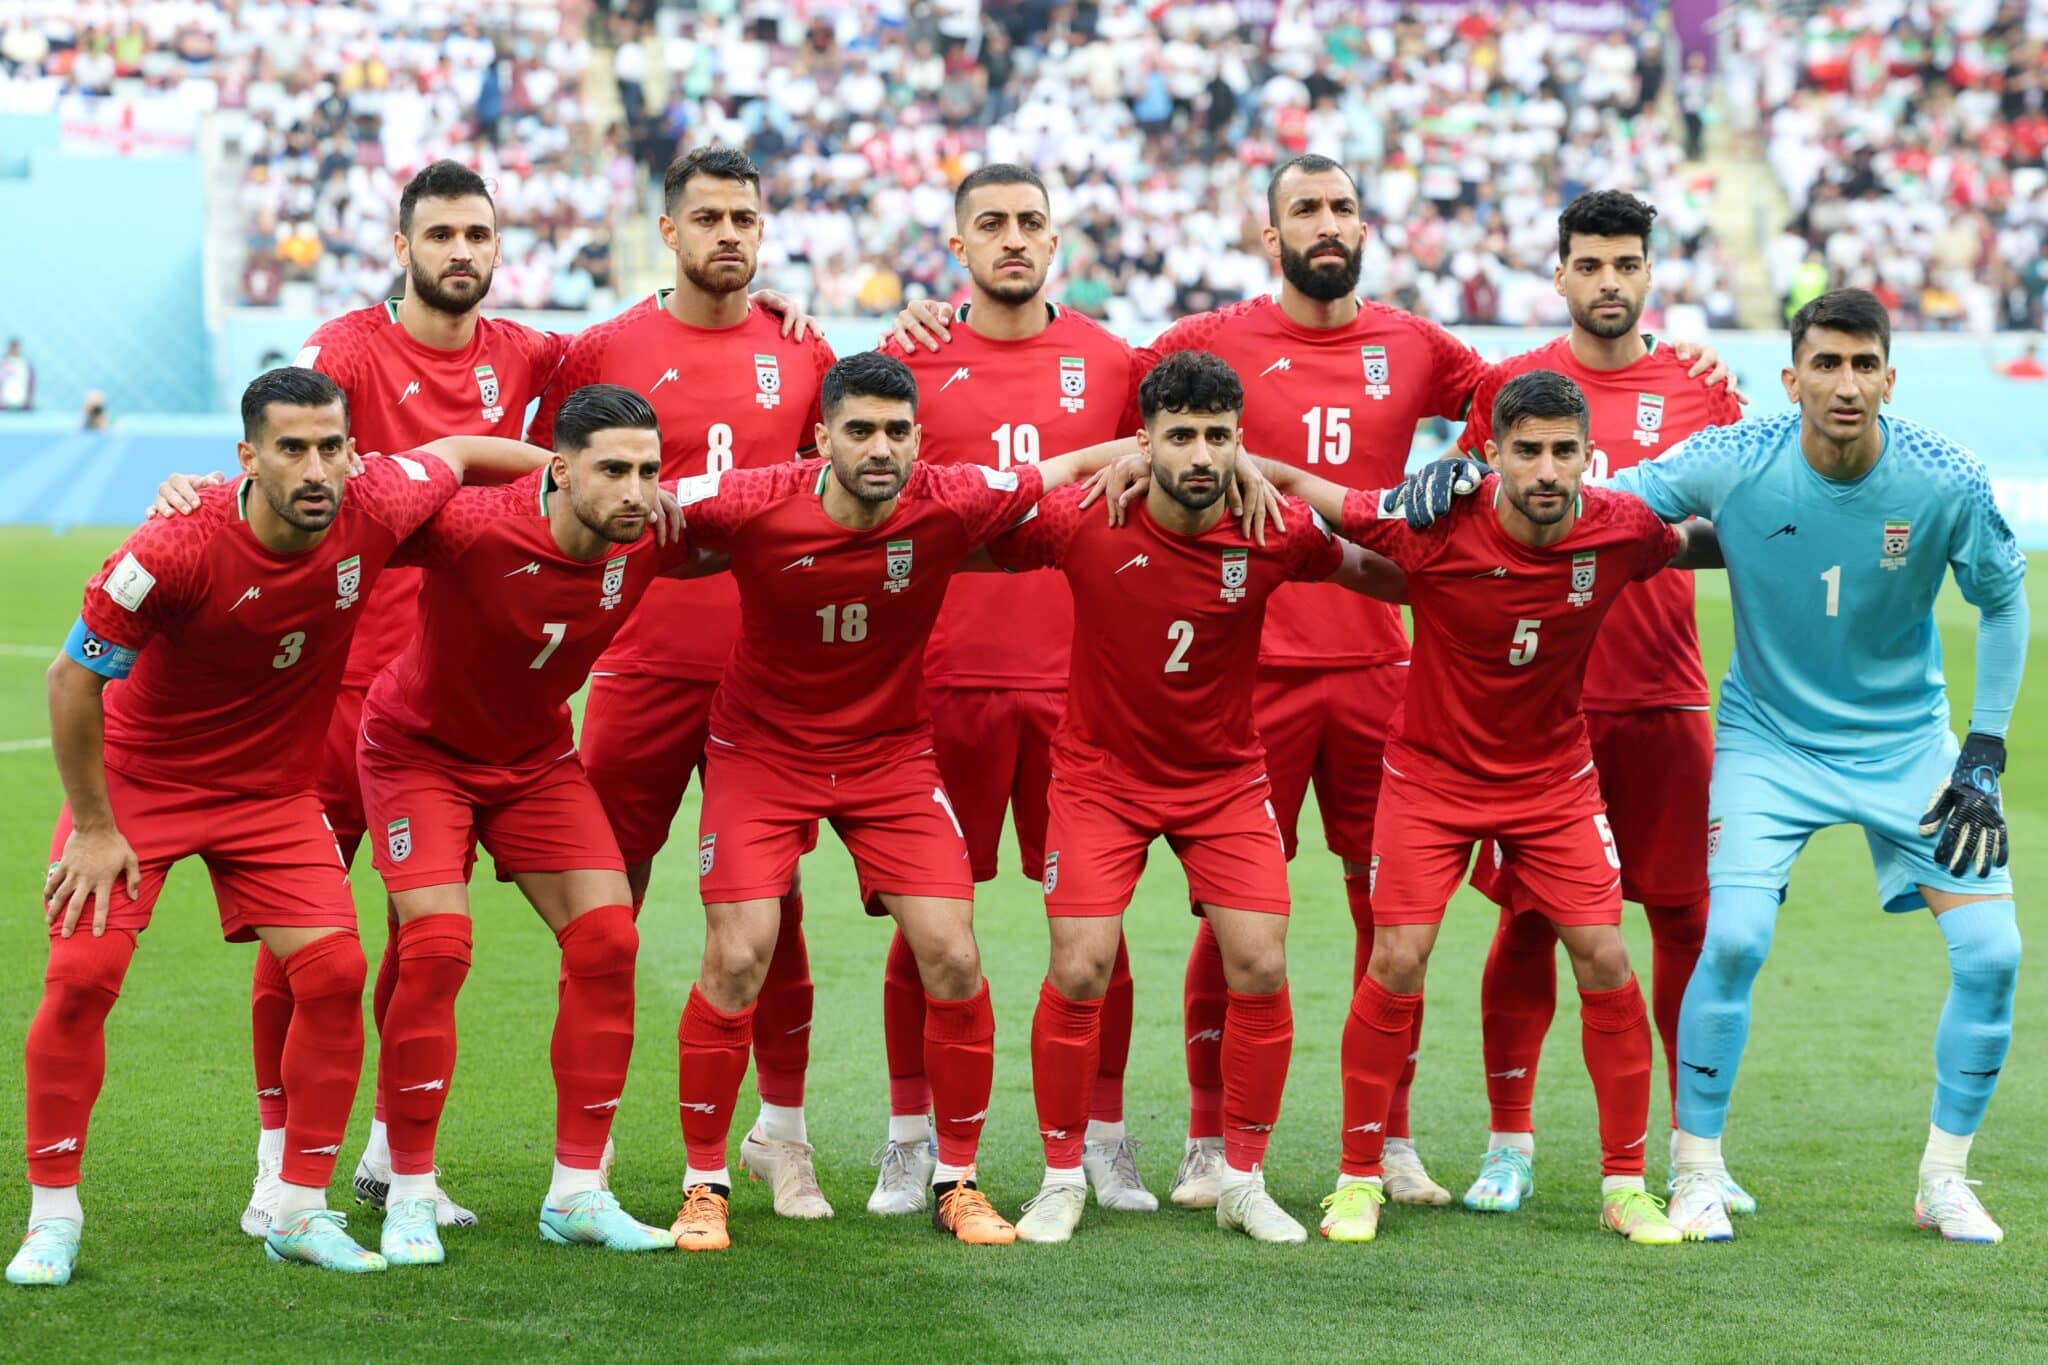 Iran national football team players pose ahead of the Qatar 2022 World Cup Group B football match between England and Iran at the Khalifa International Stadium in Doha on November 21, 2022. (Photo by FADEL SENNA / AFP) (Photo by FADEL SENNA/AFP via Getty Images)